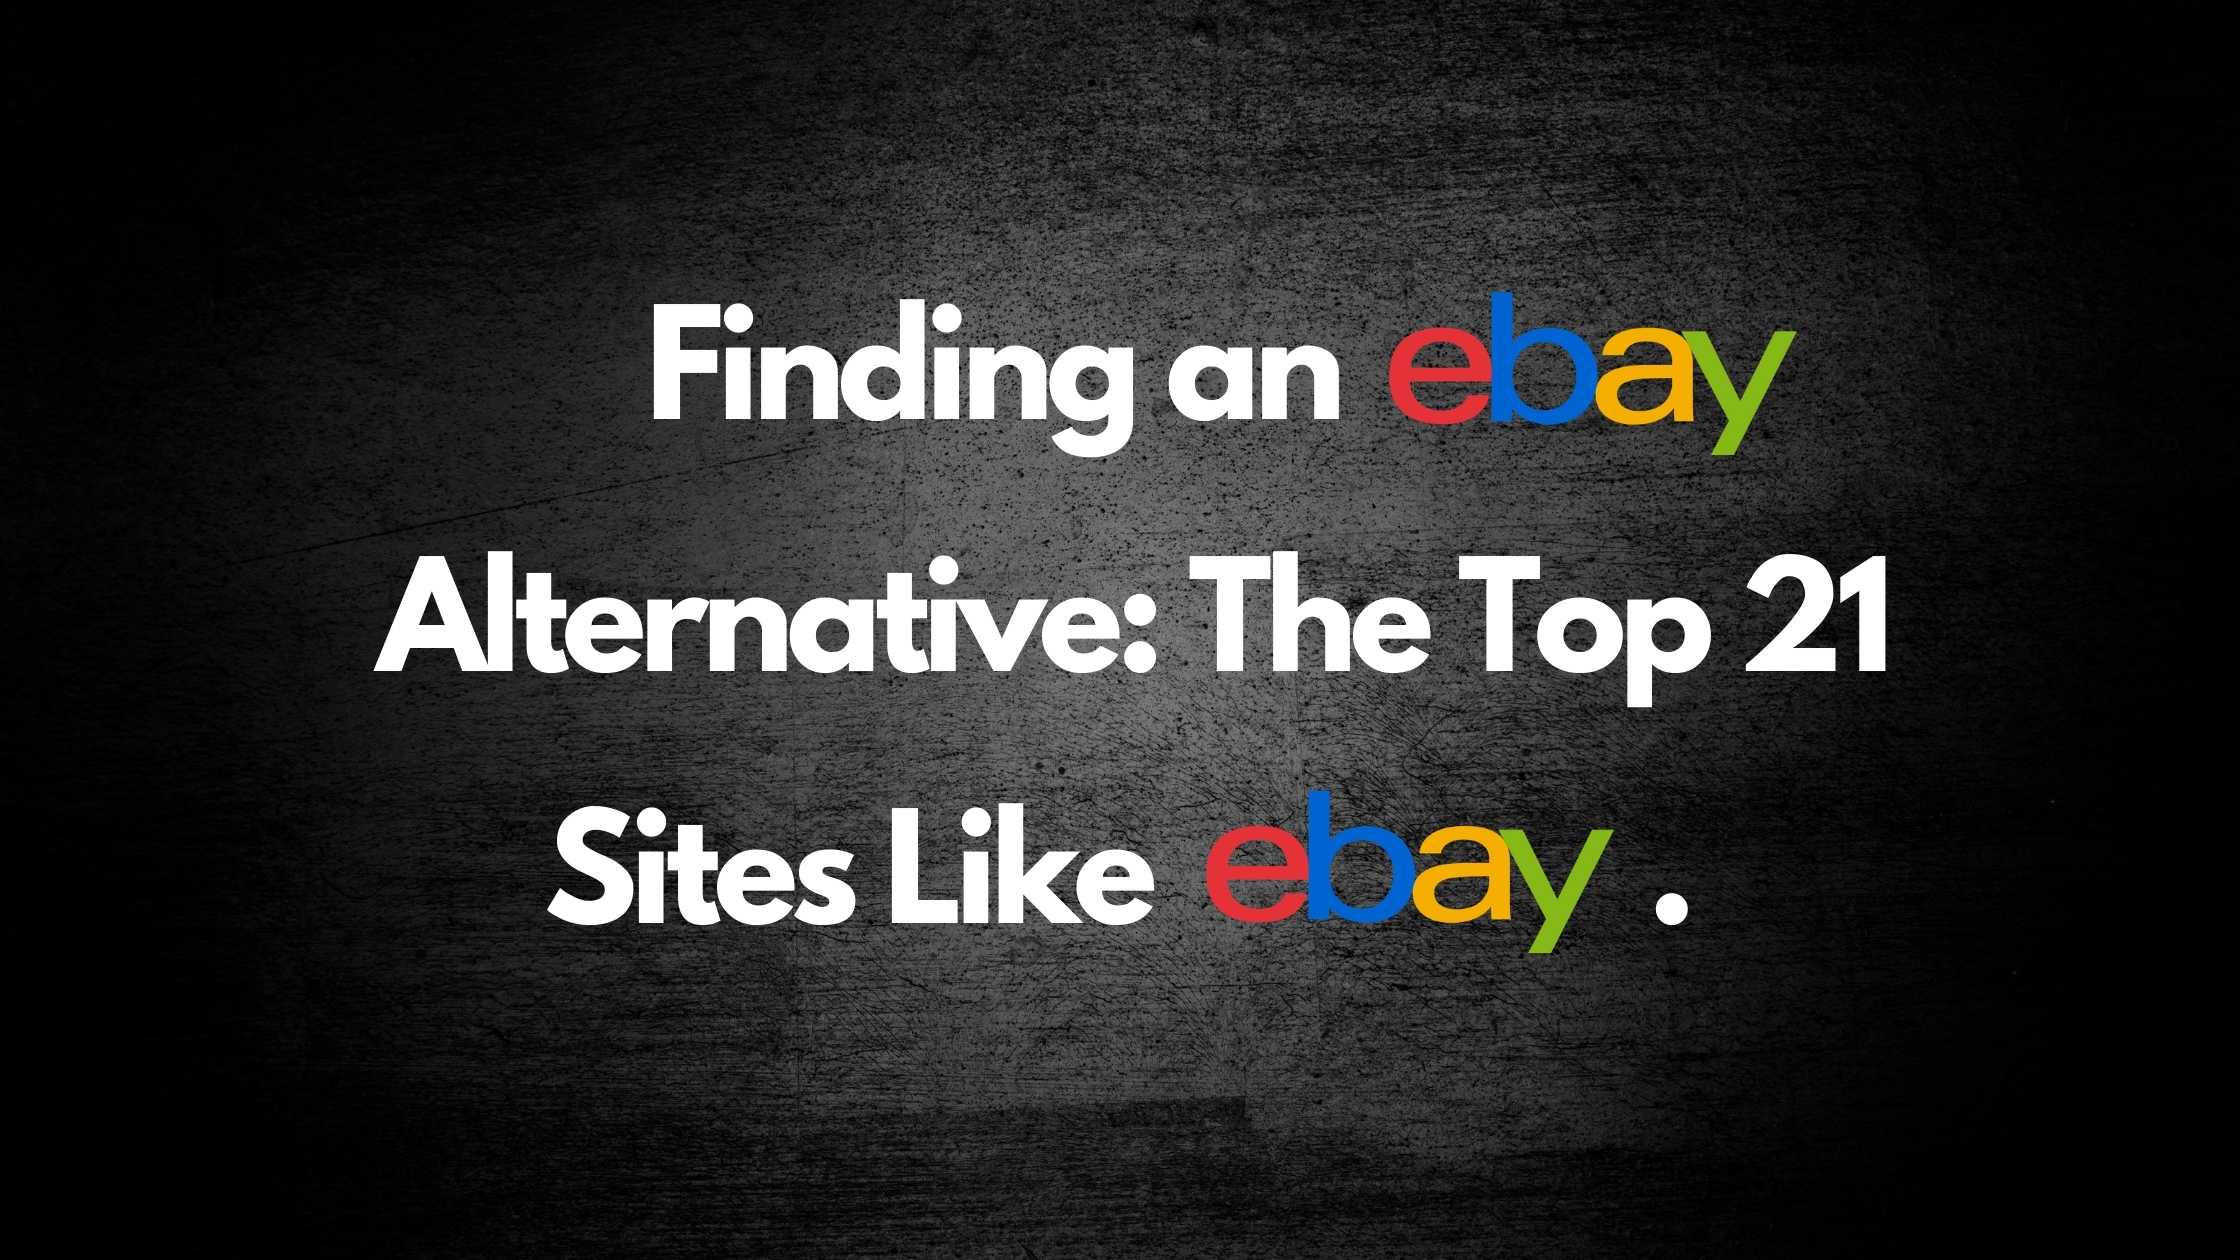 Finding an ebay alternative, The Top 21 sites like ebay